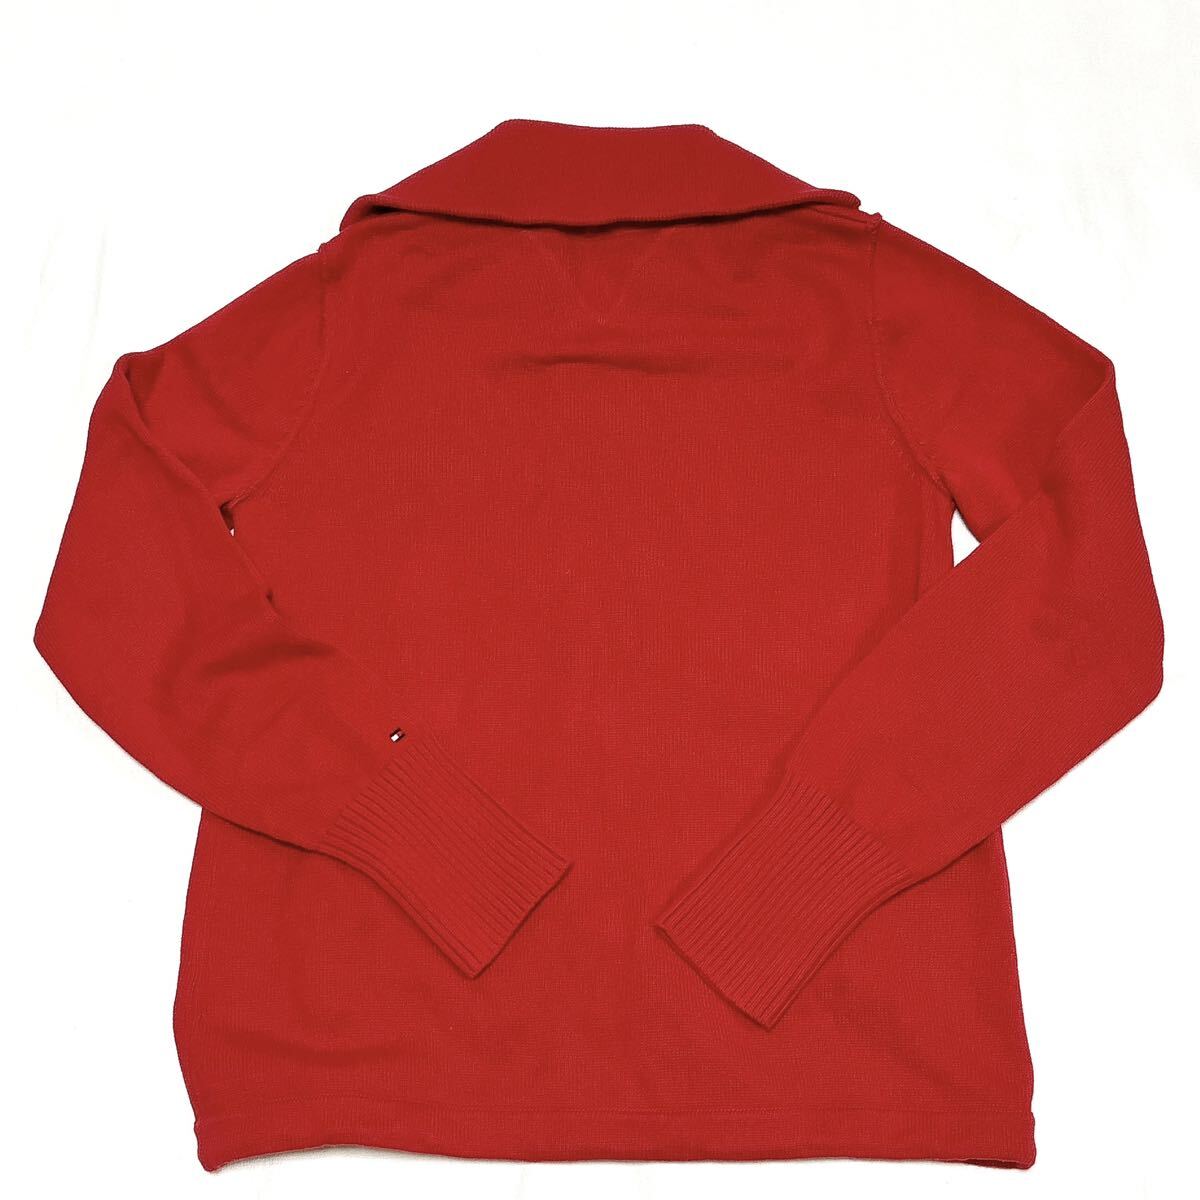 TOMY HILFIGER トミー パーカー ポロシャツ Classic Fit 黄 赤 Mサイズ 未使用 alp梅0423_画像3